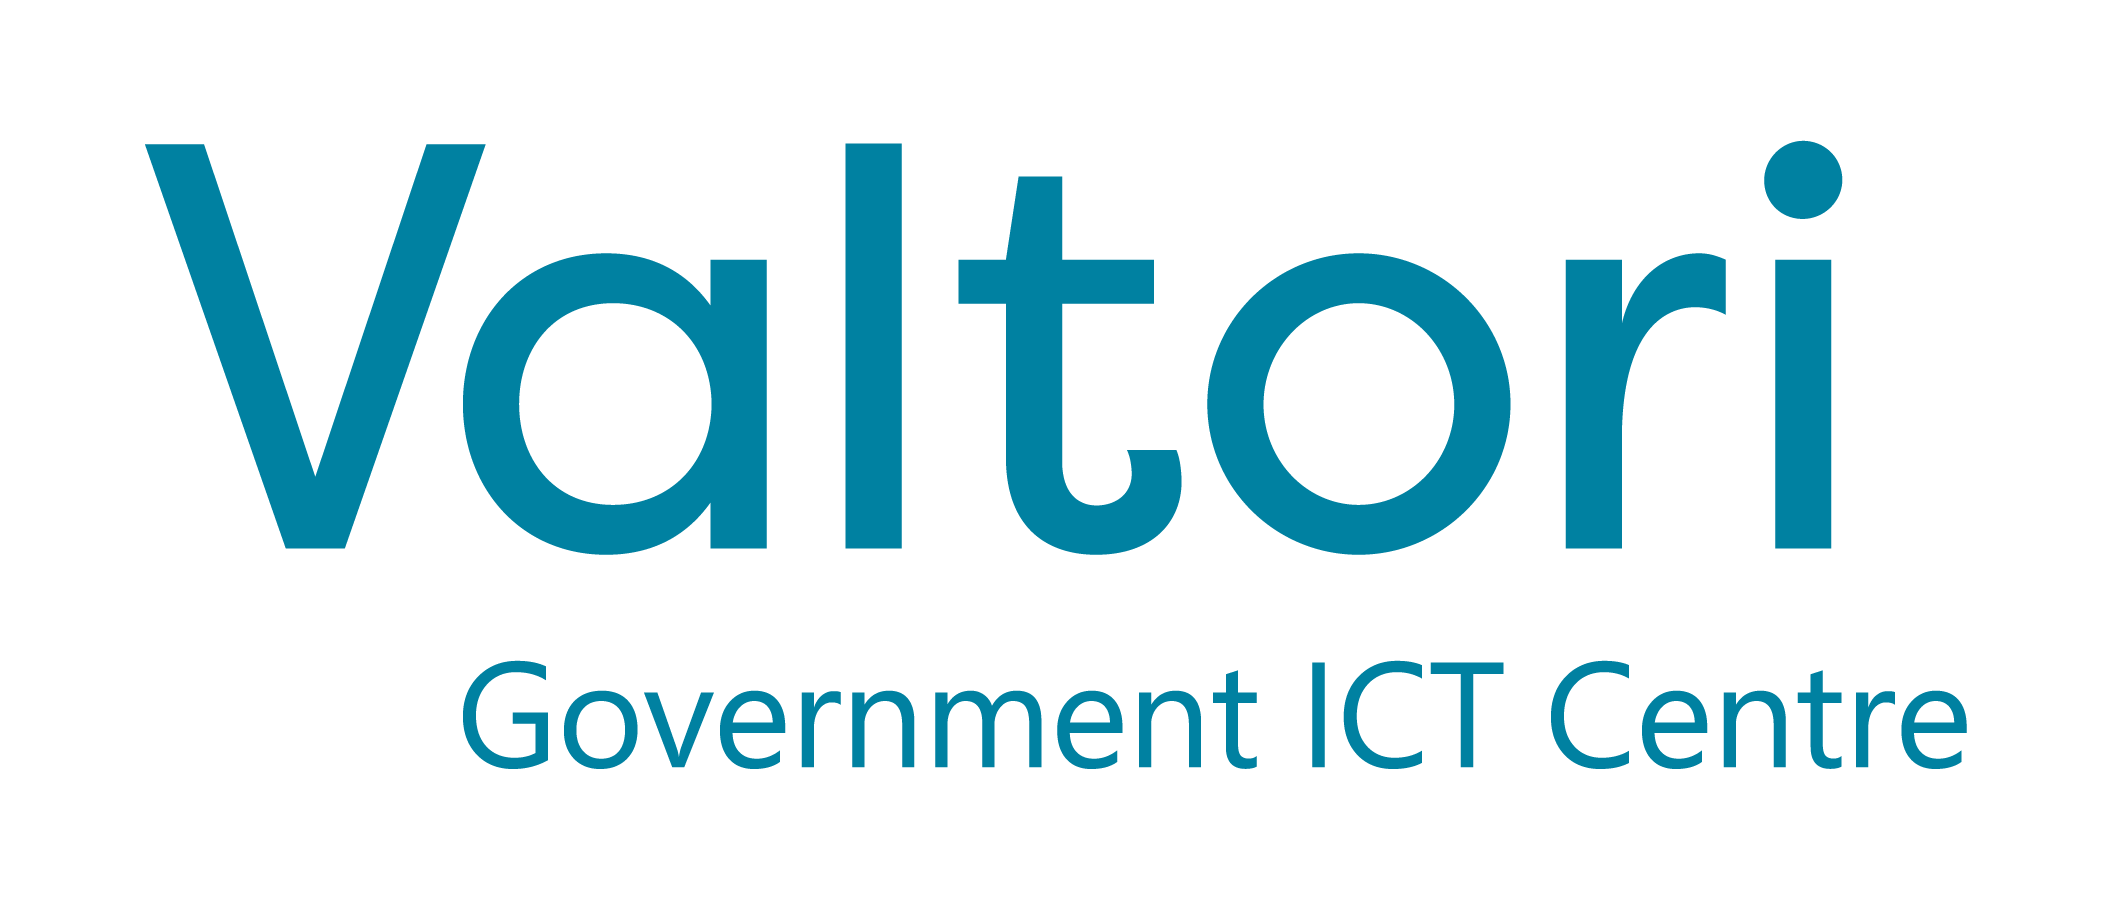 Government ICT Centre Valtori.